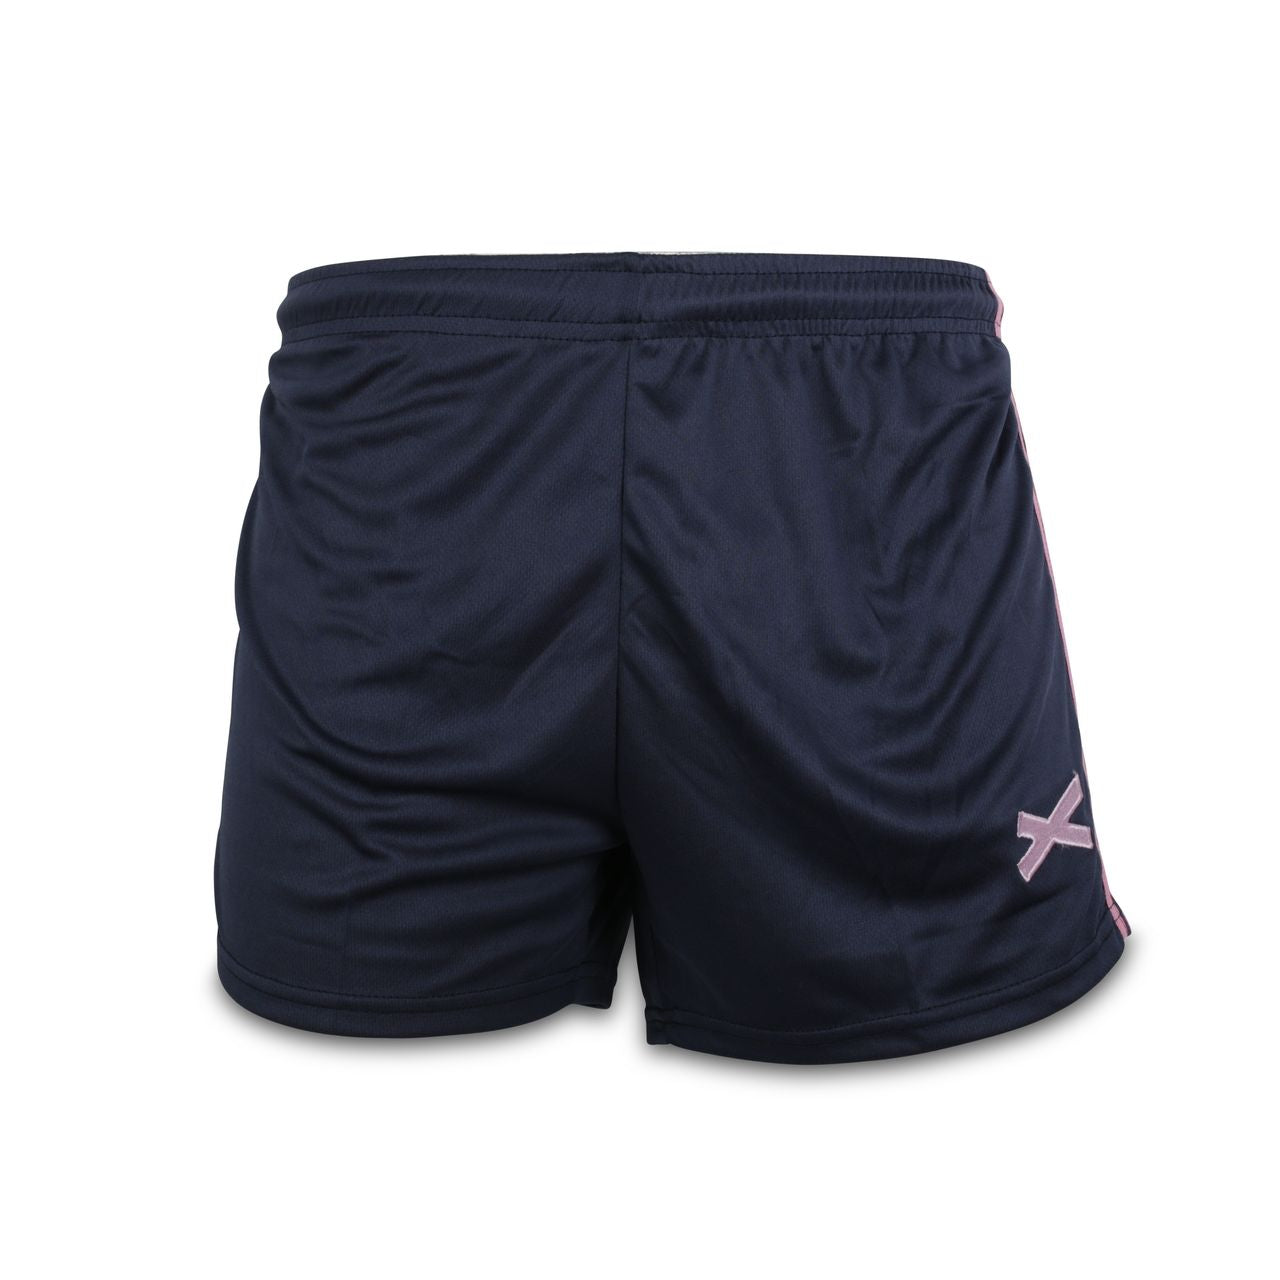 GAA Shorts Navy with Pink Stripes Gaelic Games Sportswear